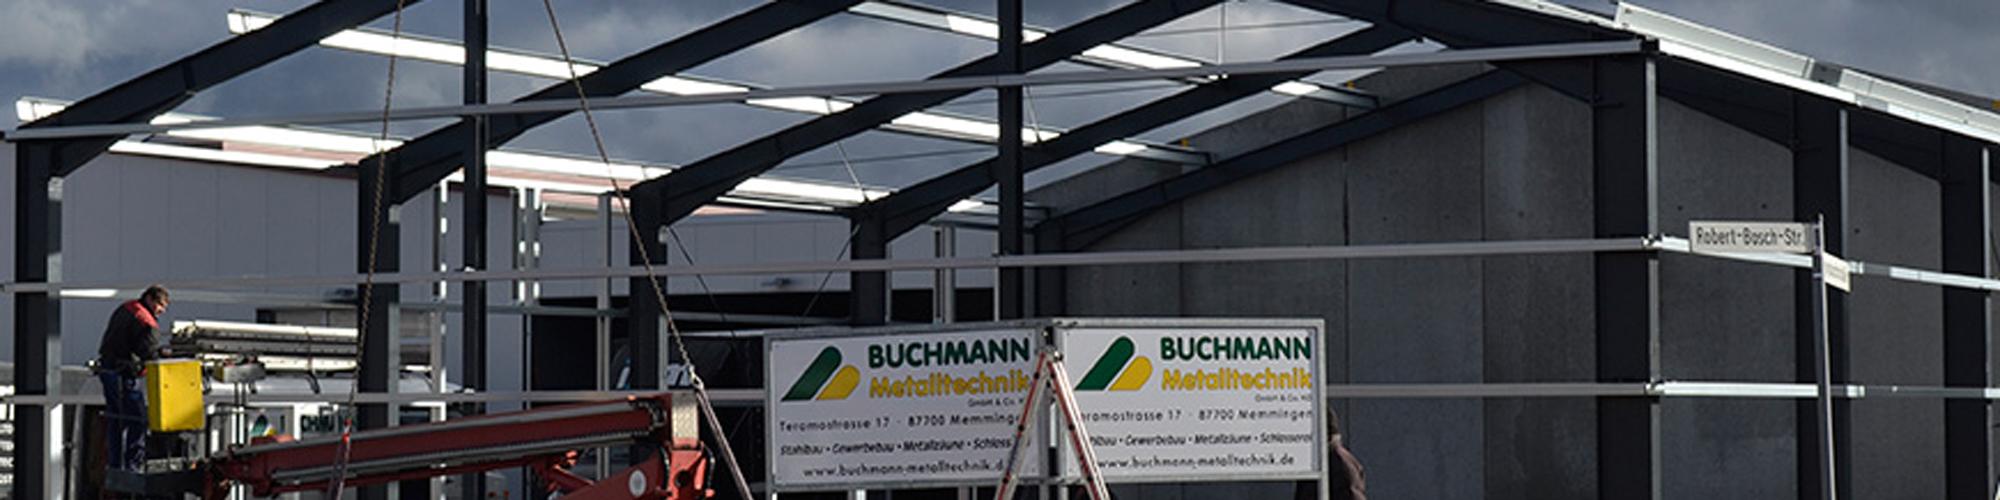 Buchmann Metalltechnik GmbH & Co. KG